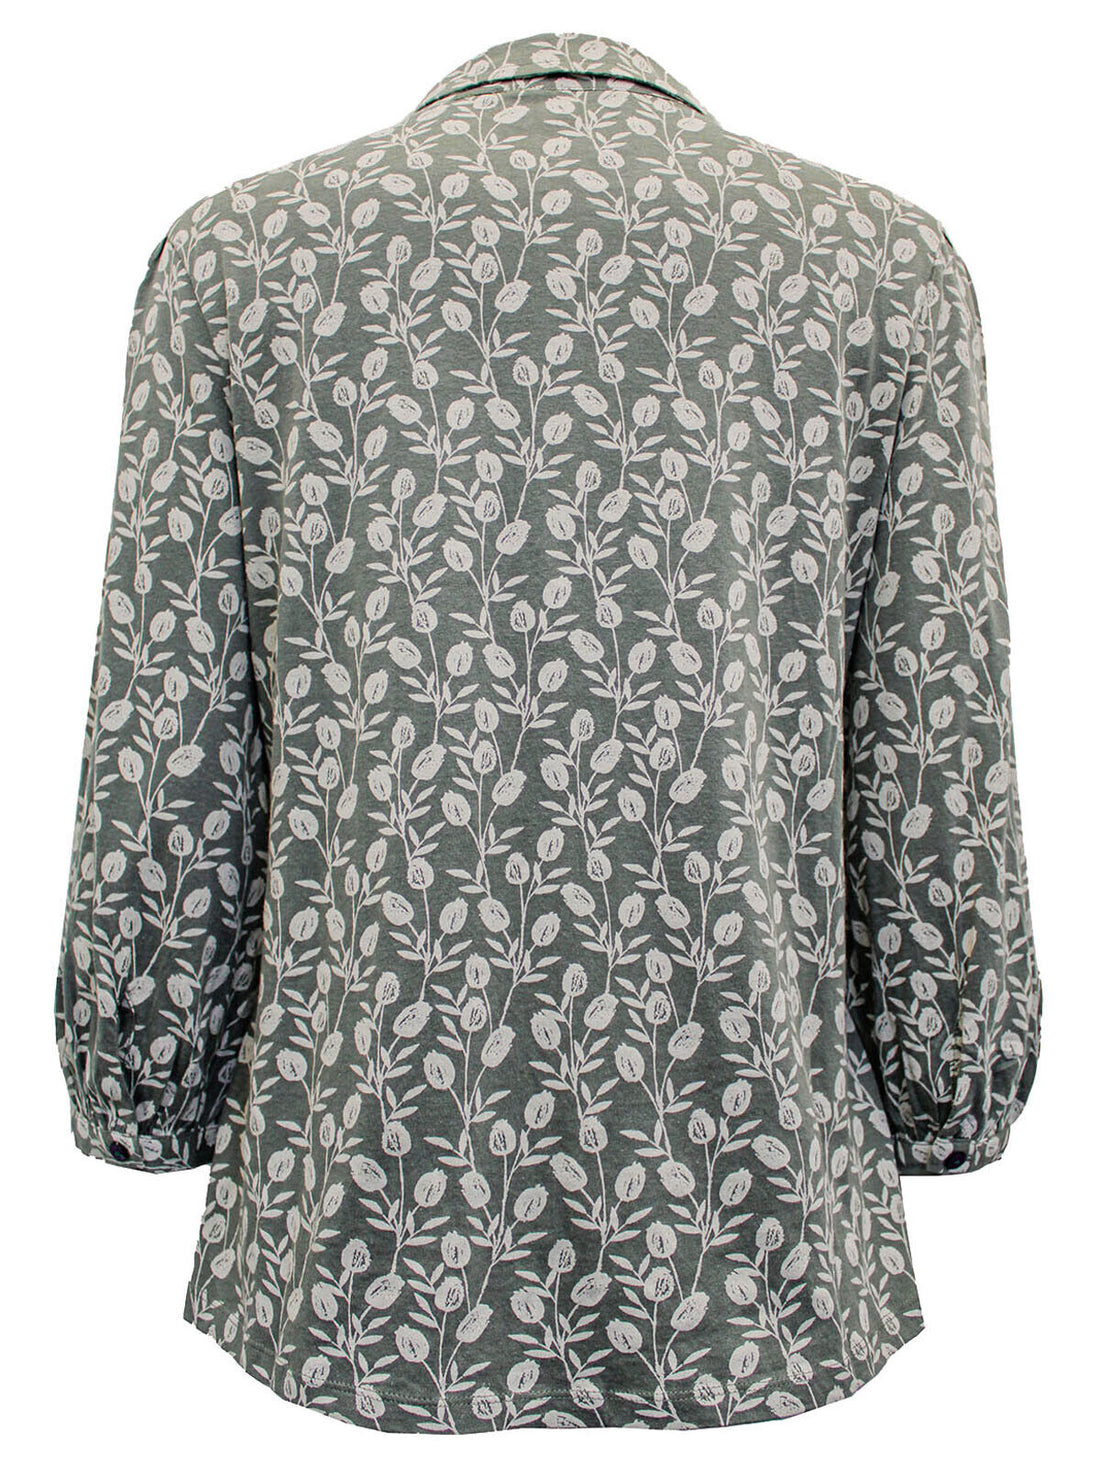 EX Seasalt Pale Green/Grey Poppy Heads Embrace Jersey Shirt Size 8-28 RRP £45.95